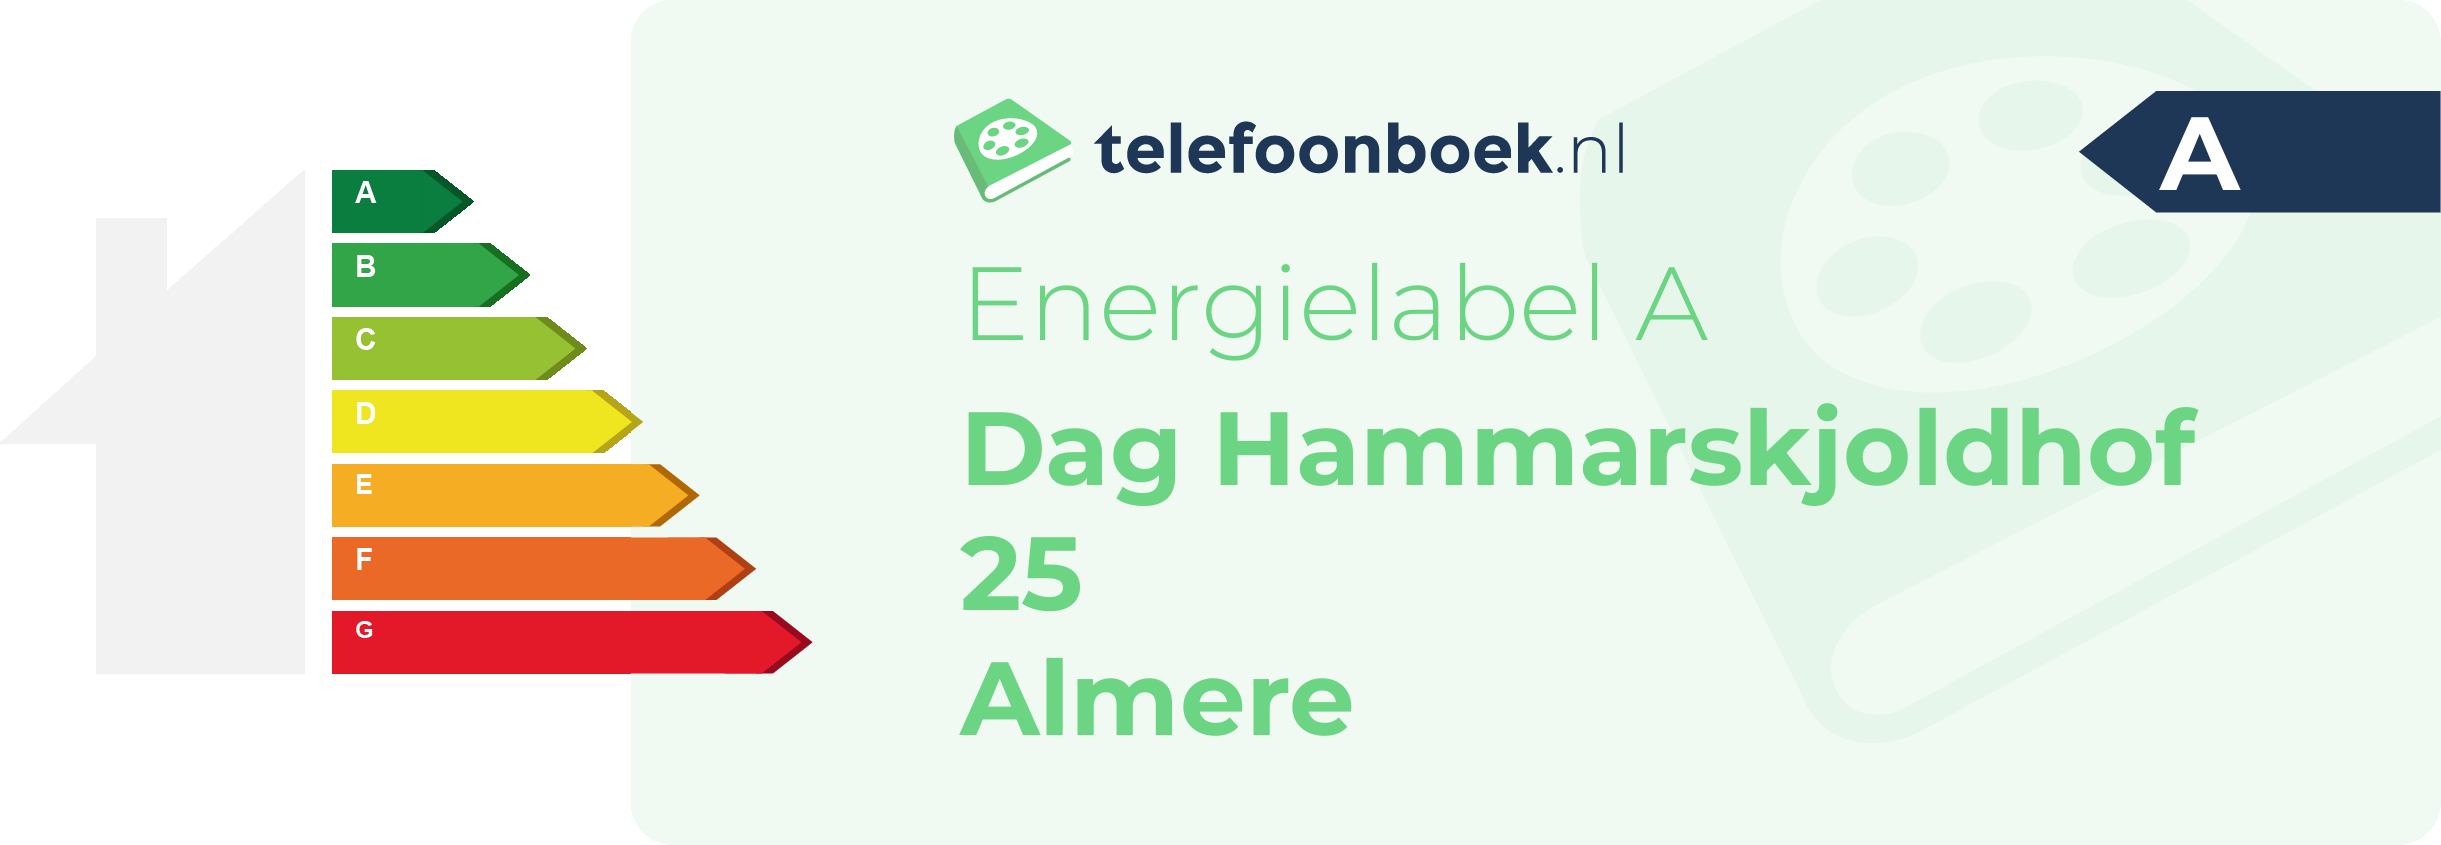 Energielabel Dag Hammarskjoldhof 25 Almere